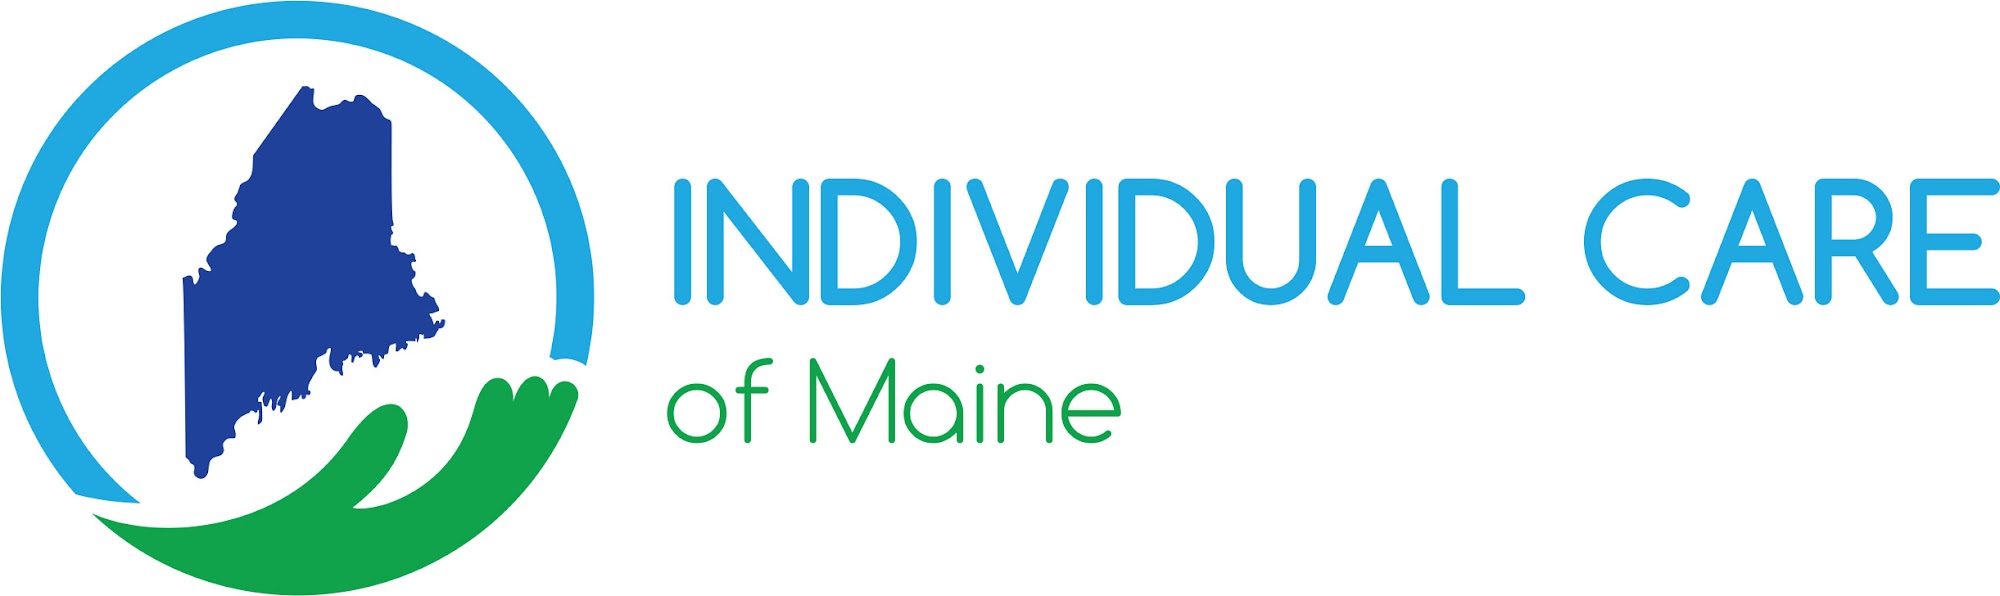 Individual Care of Maine